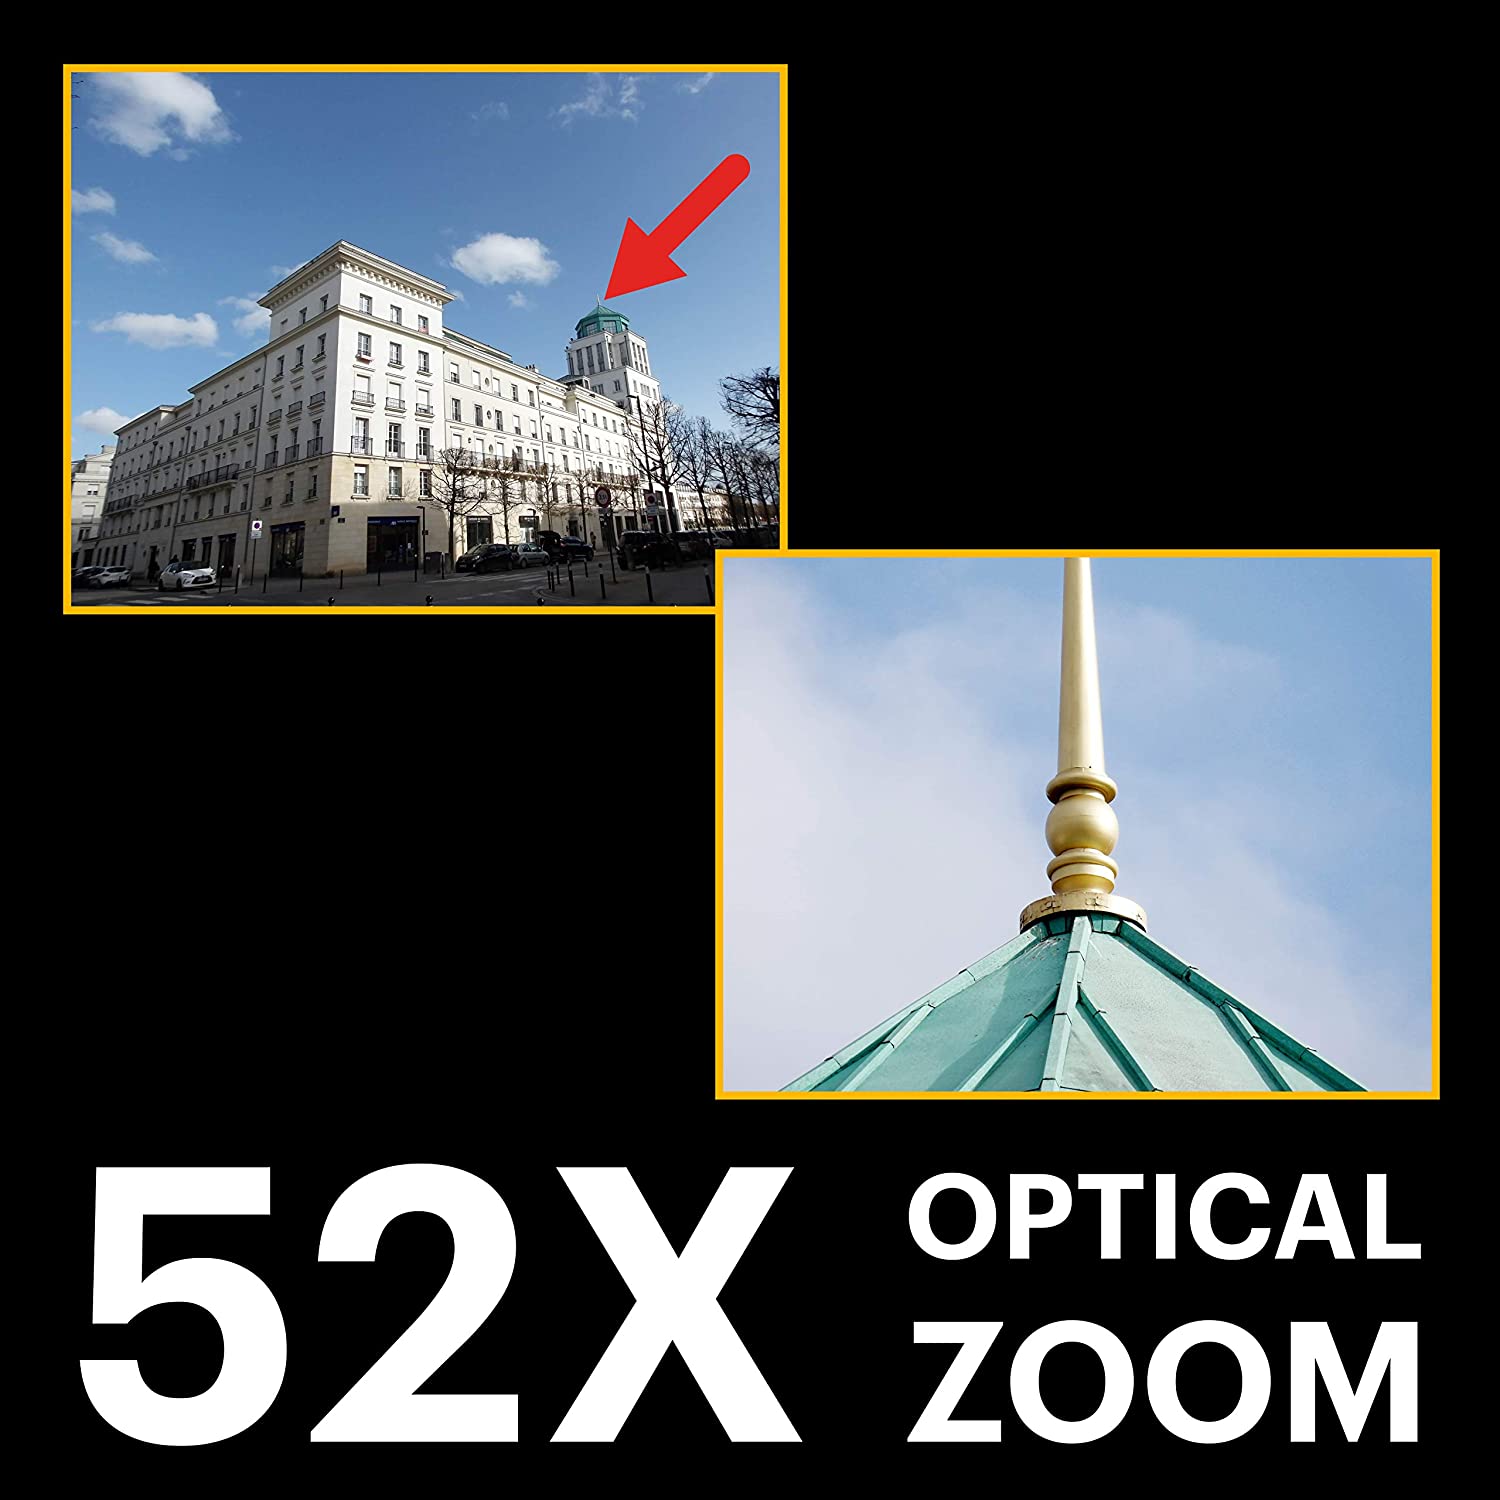 Kodak PIXPRO AZ528 16MP Digital Camera with 52x Optical Zoom